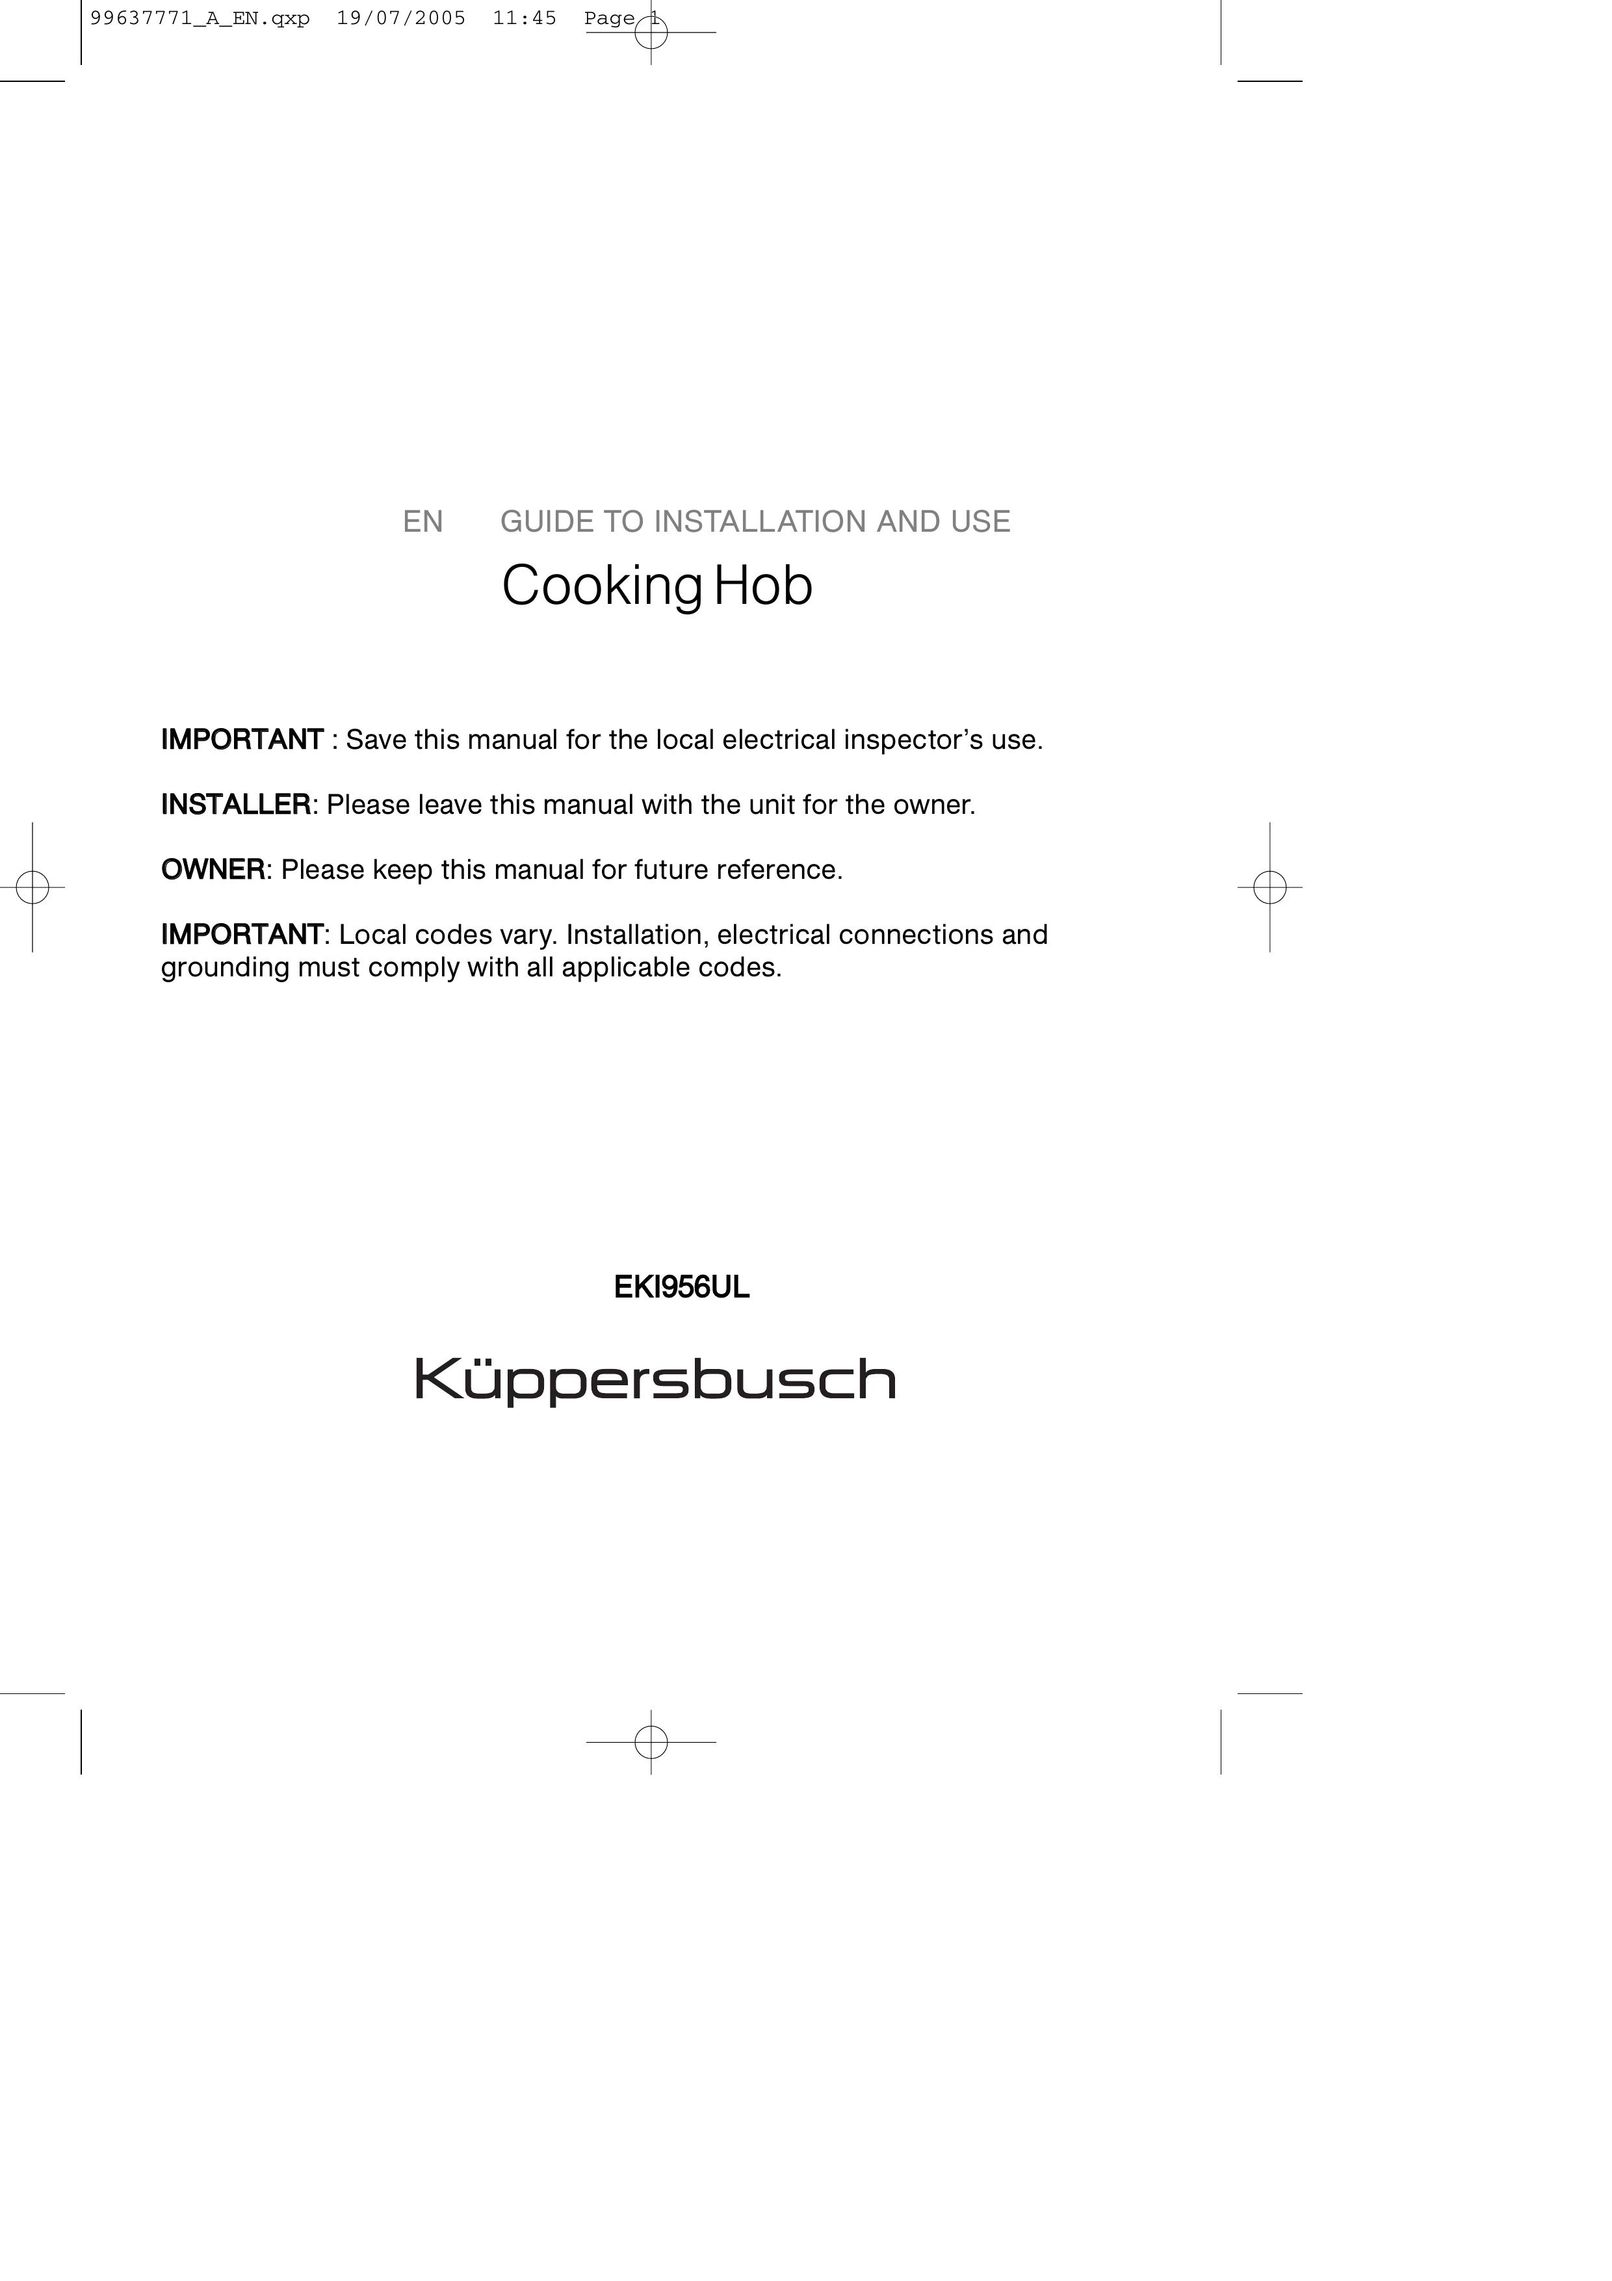 Kuppersbusch USA EKI956UL Cooktop User Manual